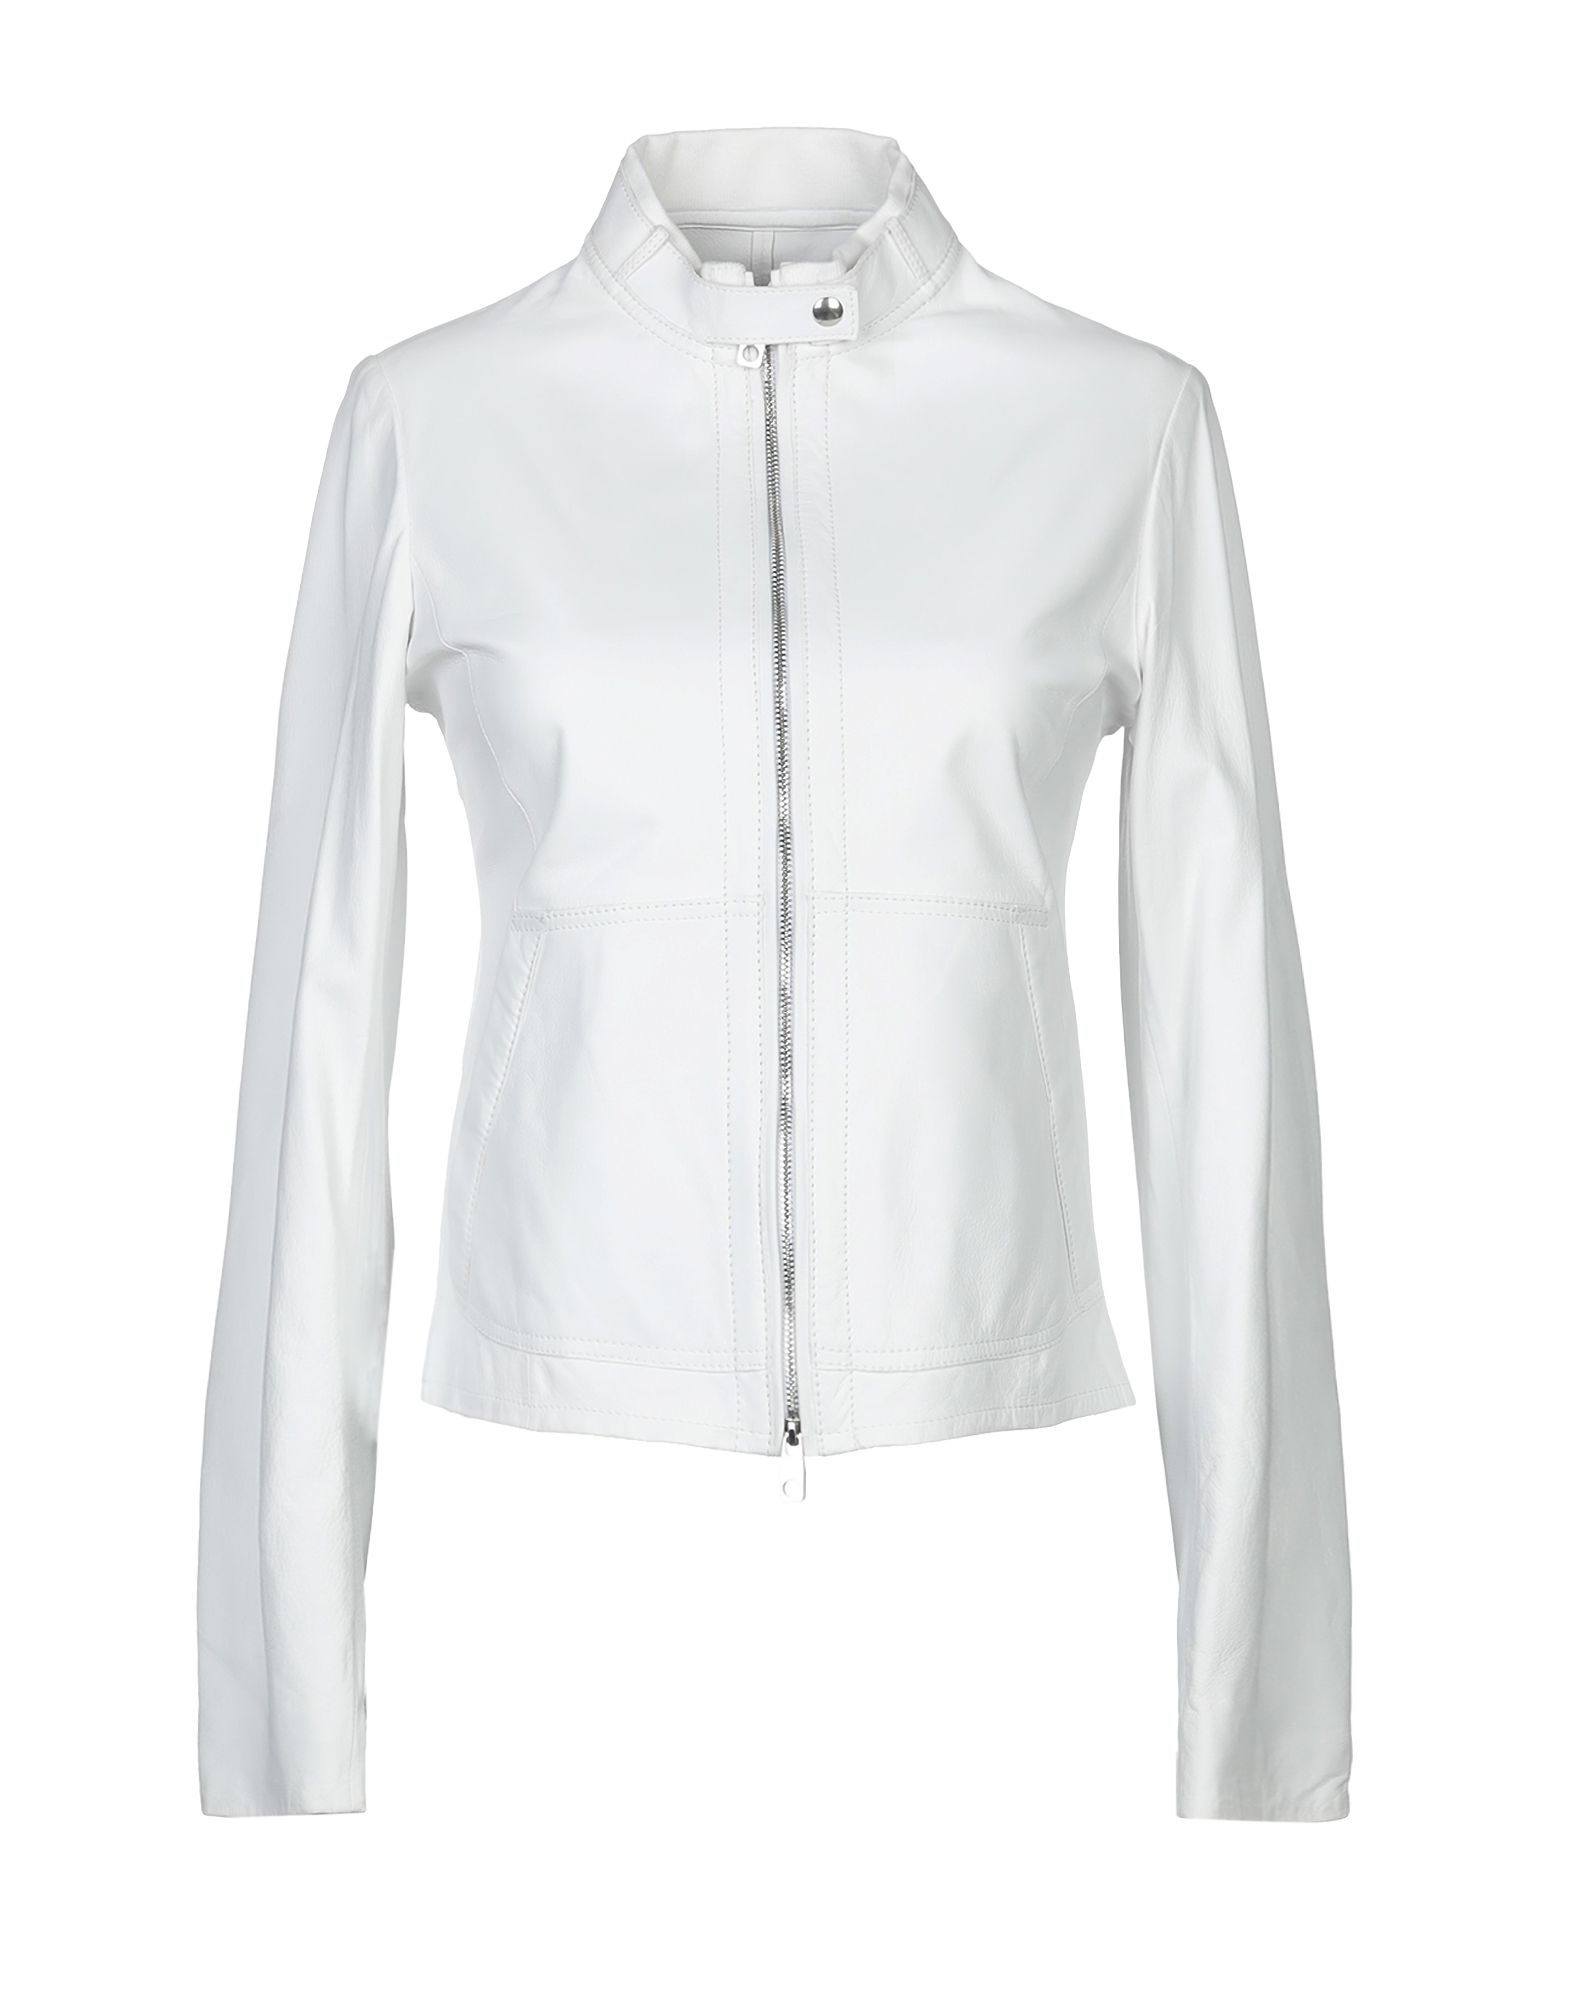 white armani jacket